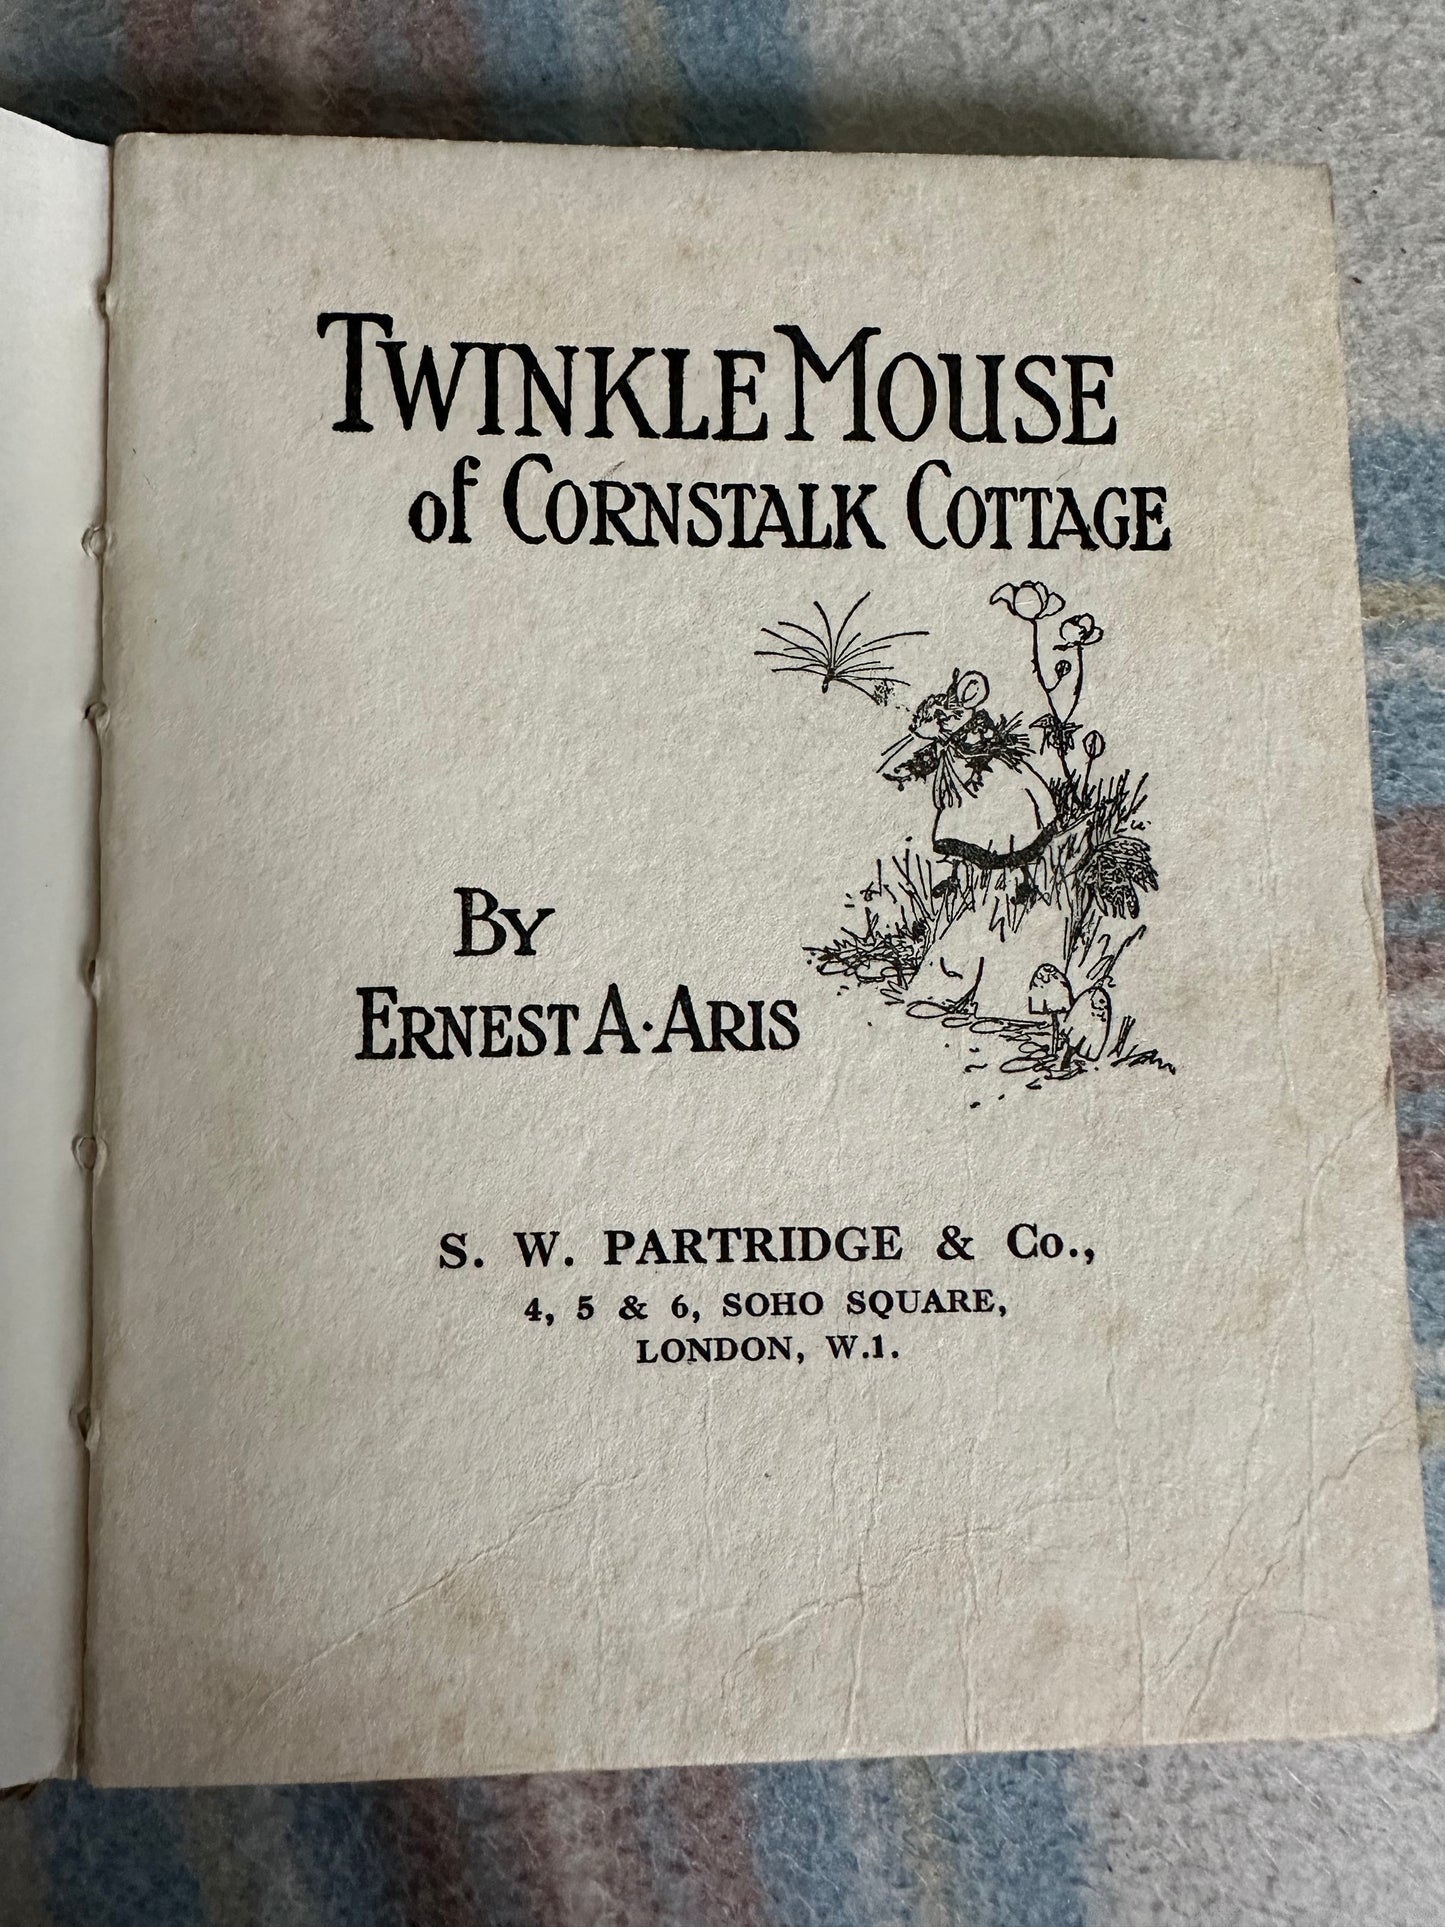 1933 Twinkle Mouse Of Cornstalk Cottage by Ernest Aris(S. W. Partridge & Co)